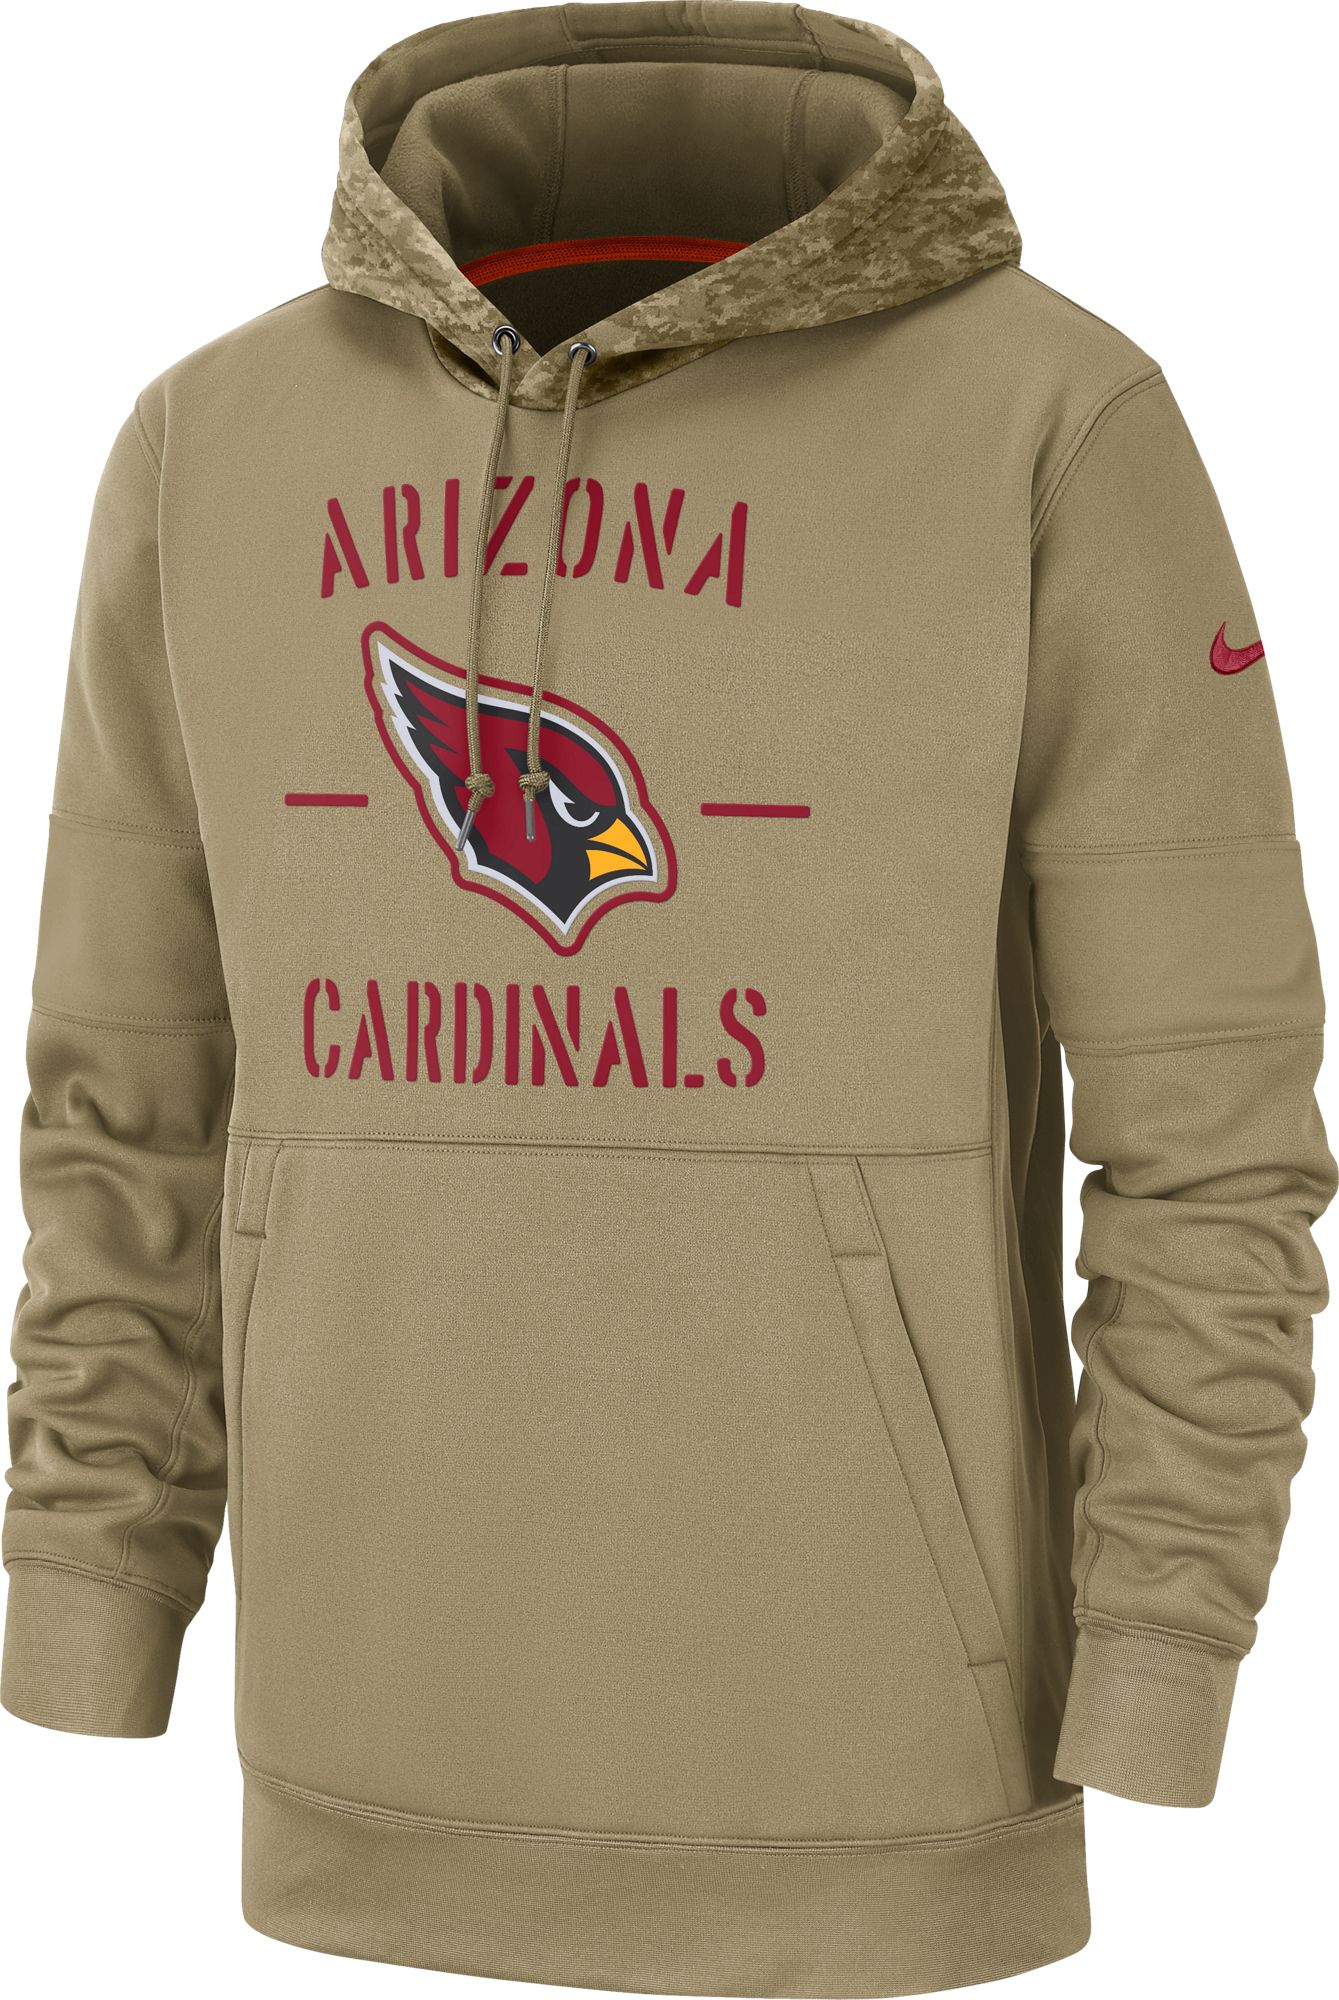 az cardinals military hoodie